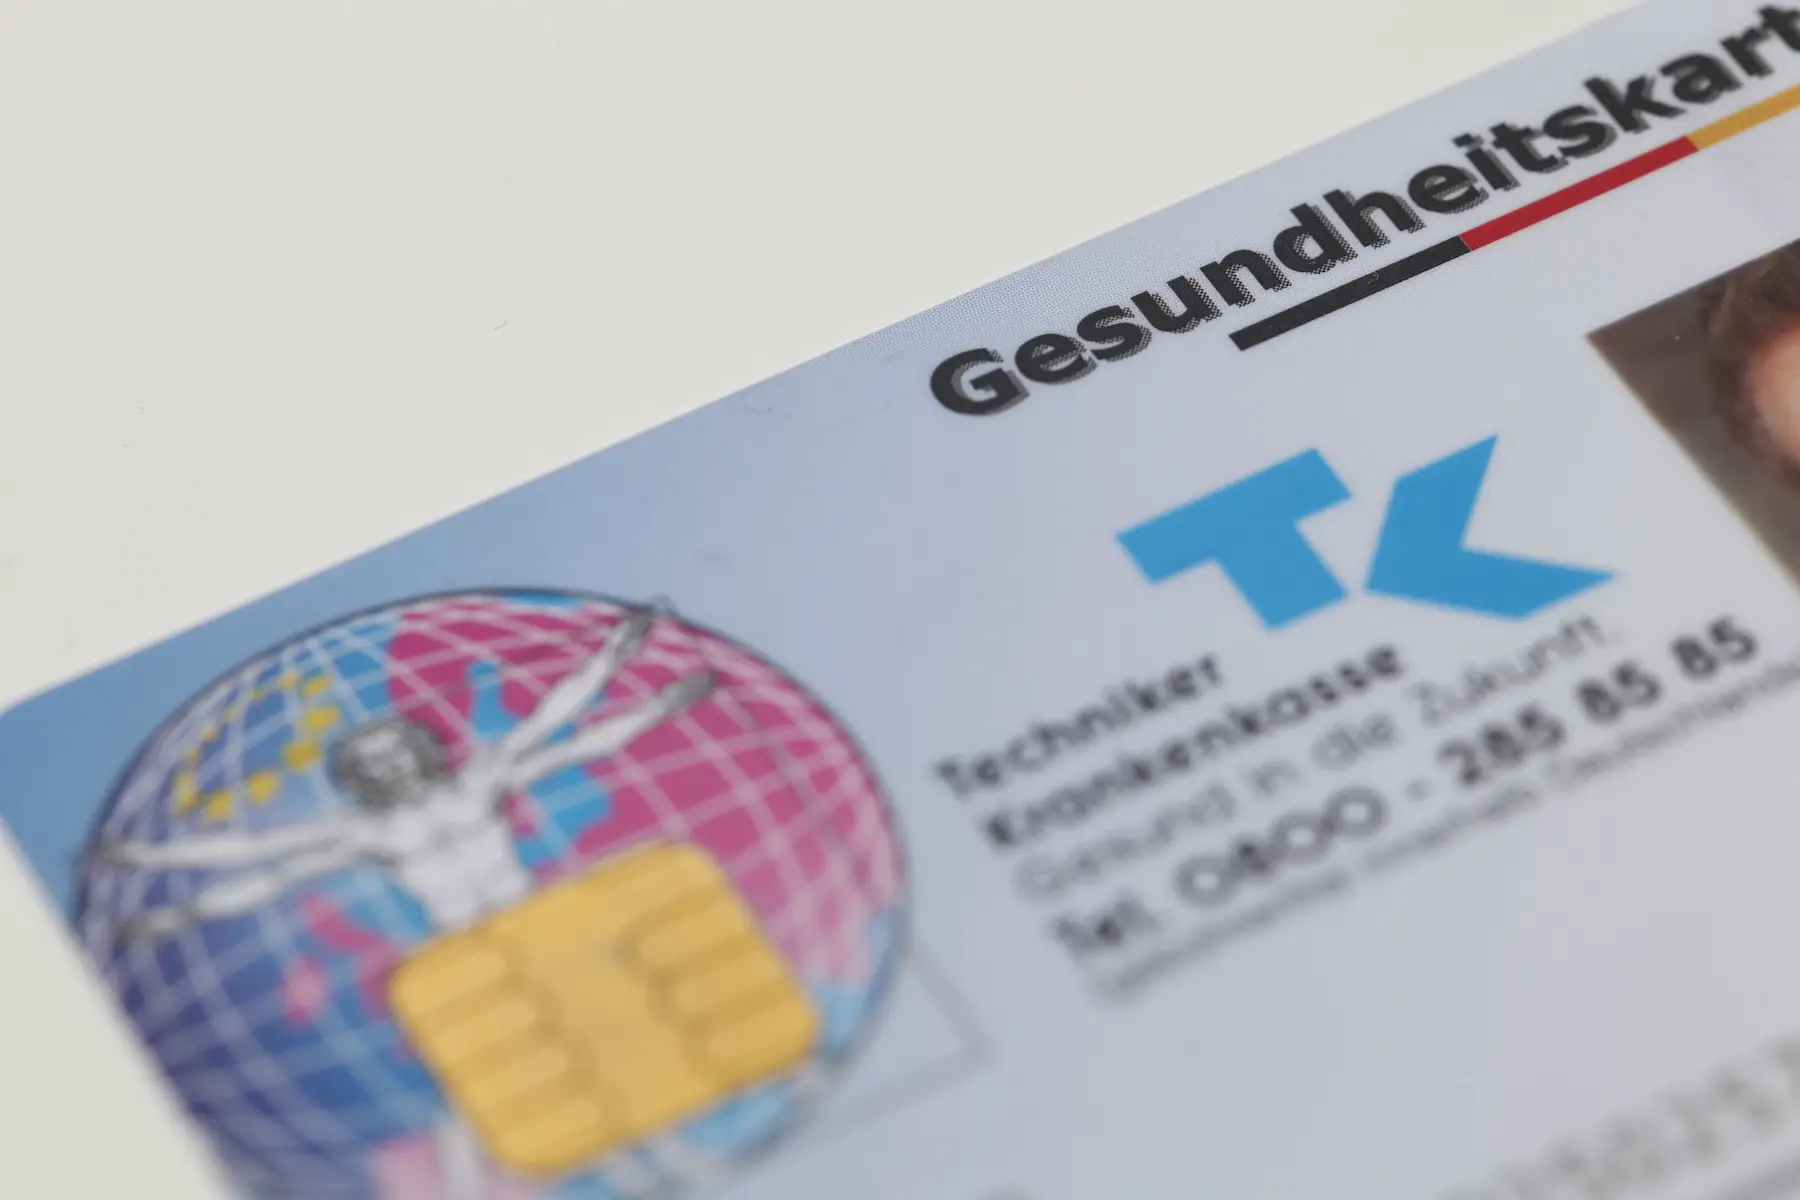 Close-up shot of a Gesundheitskarte (German healthcare card) issued by the public insurance company Techniker Krankenkasse